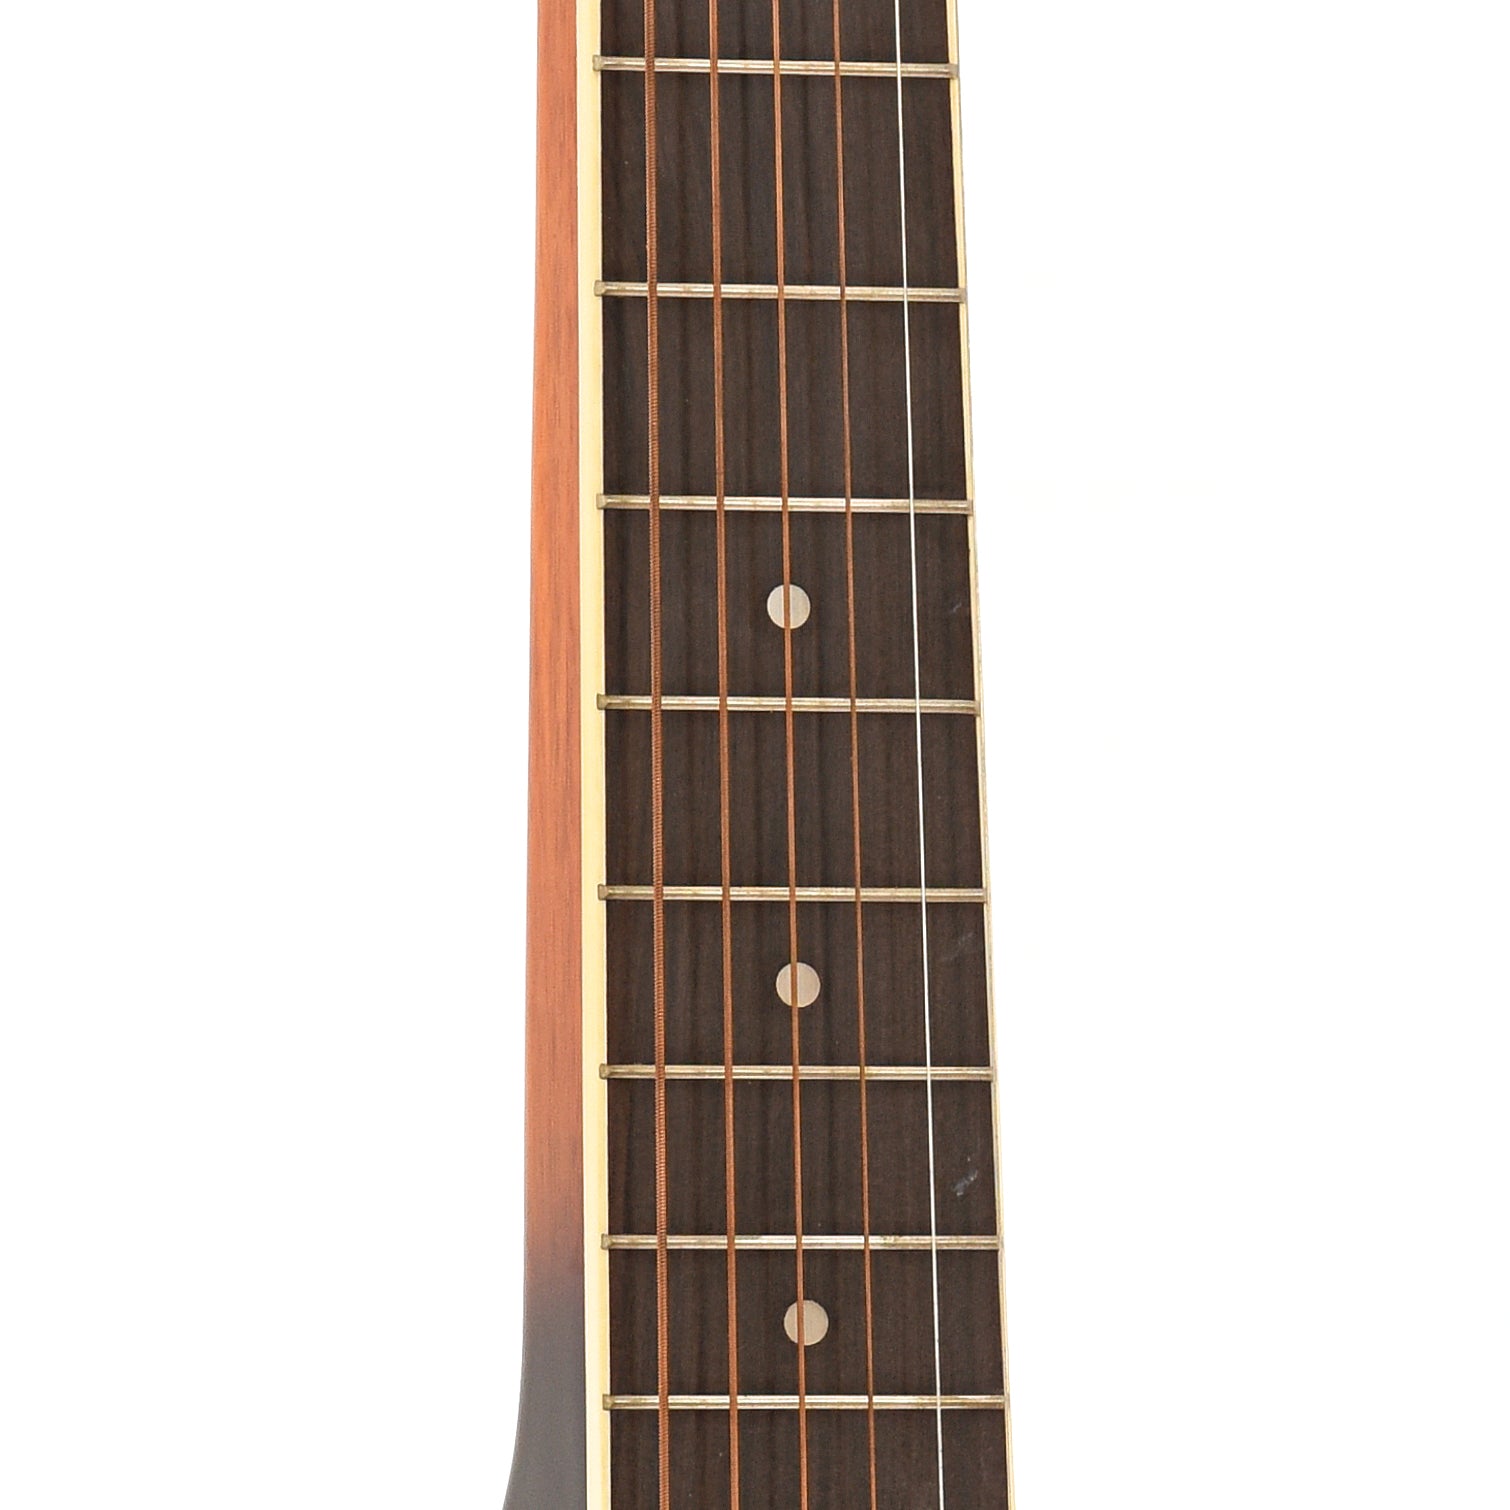 Fretboard of Regal RD-40VS Resonator Guitar